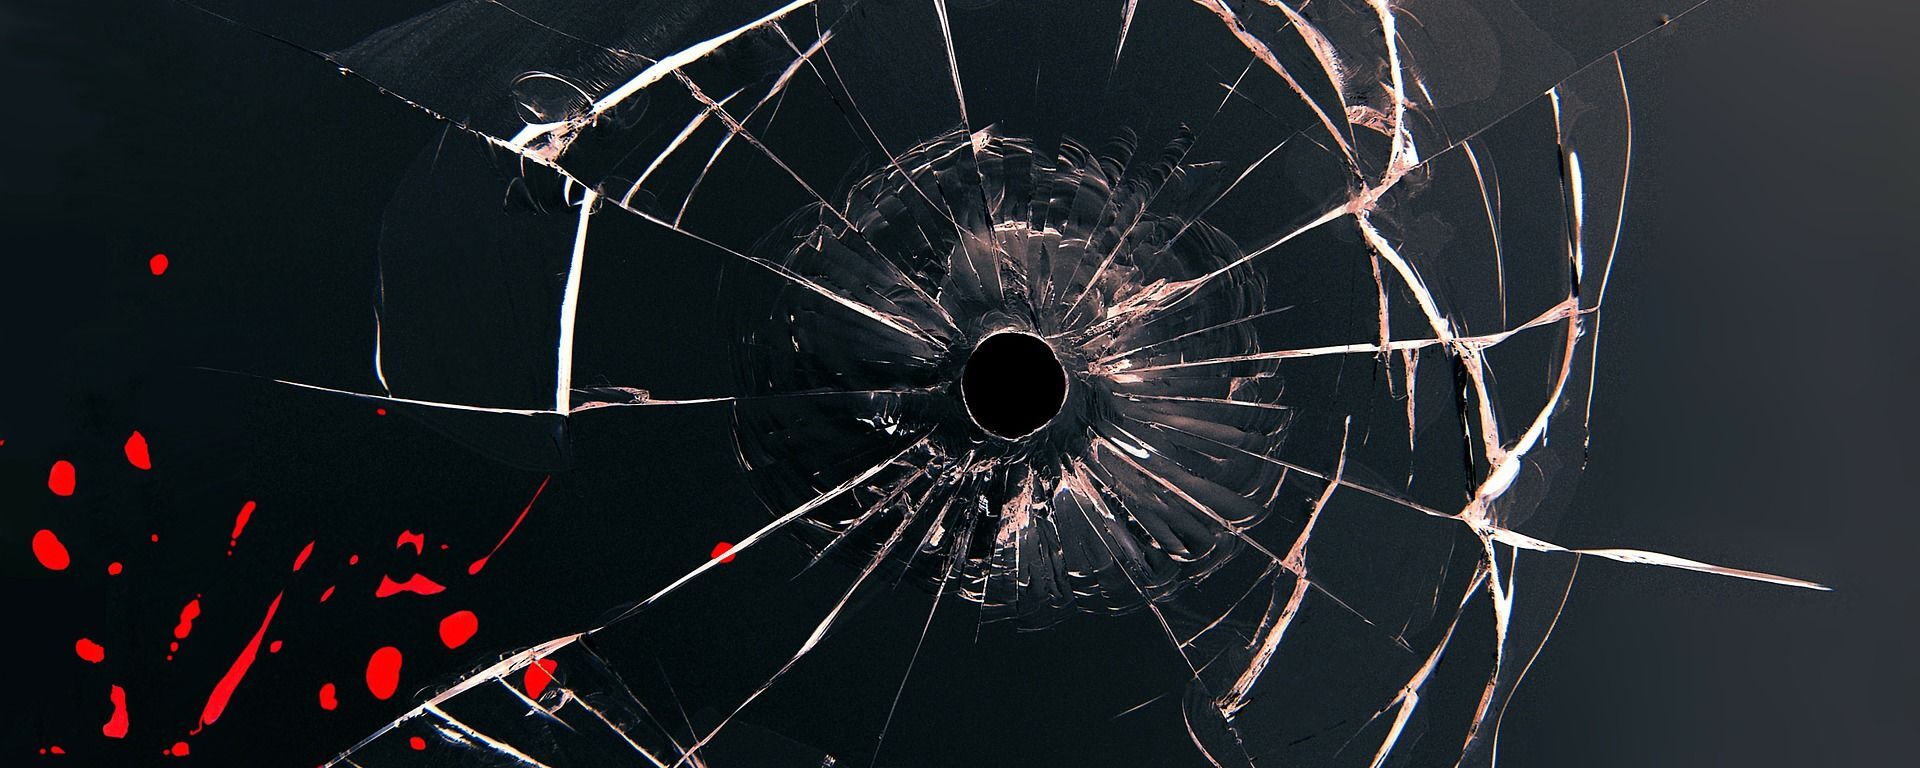 Un cristal roto (imagen referencial) - Sputnik Mundo, 1920, 20.09.2021